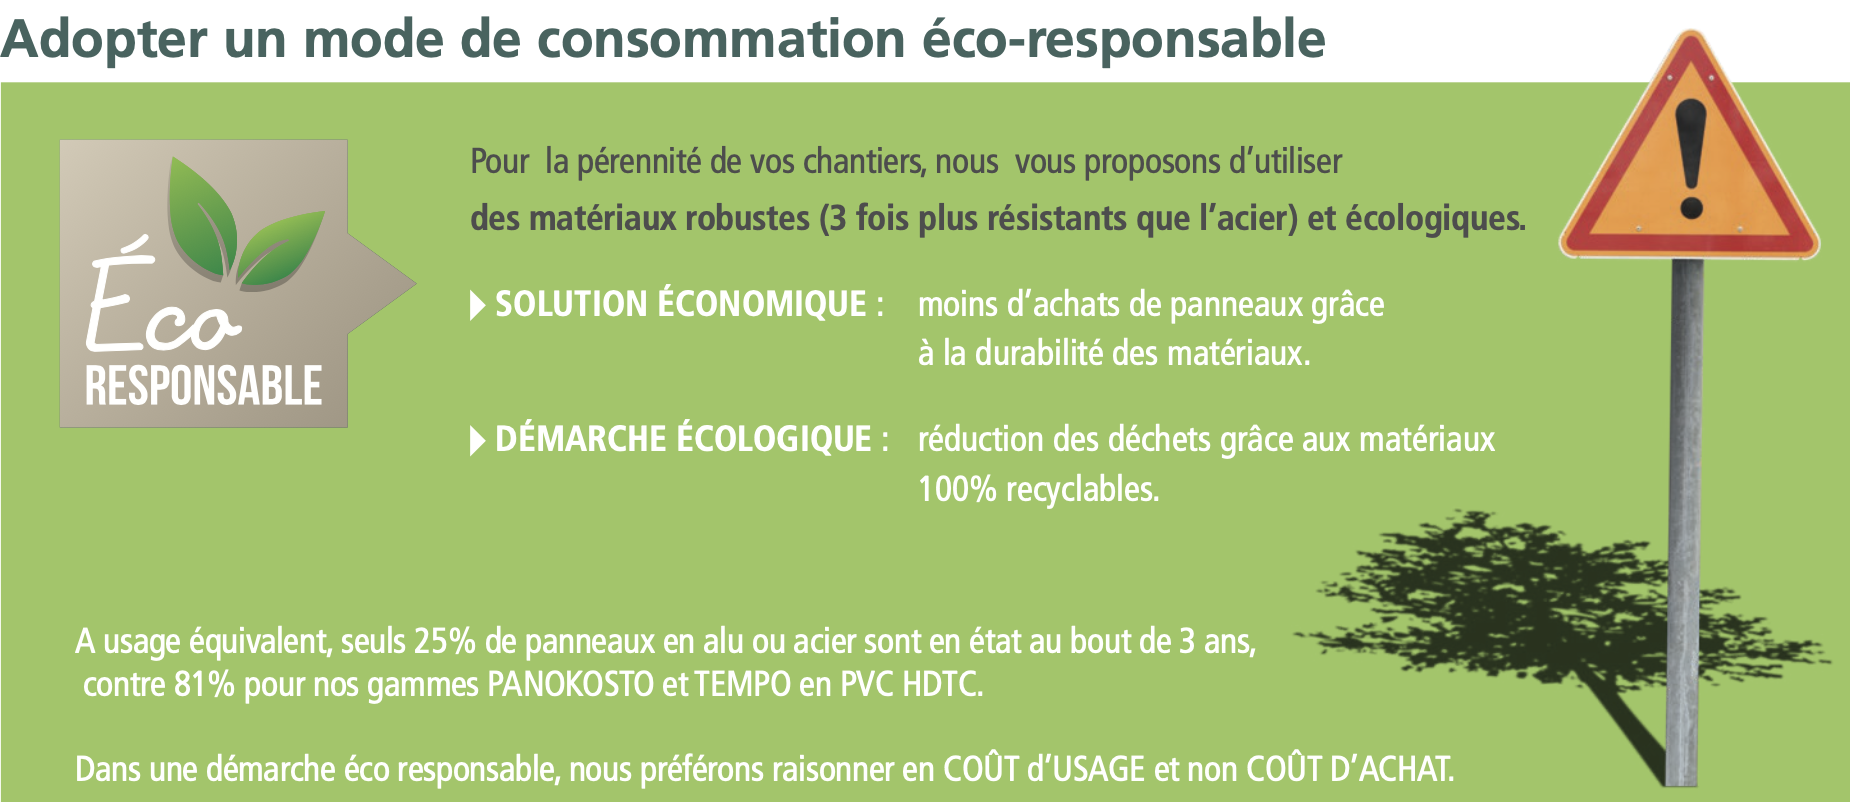 un mode de consommation eco responsable